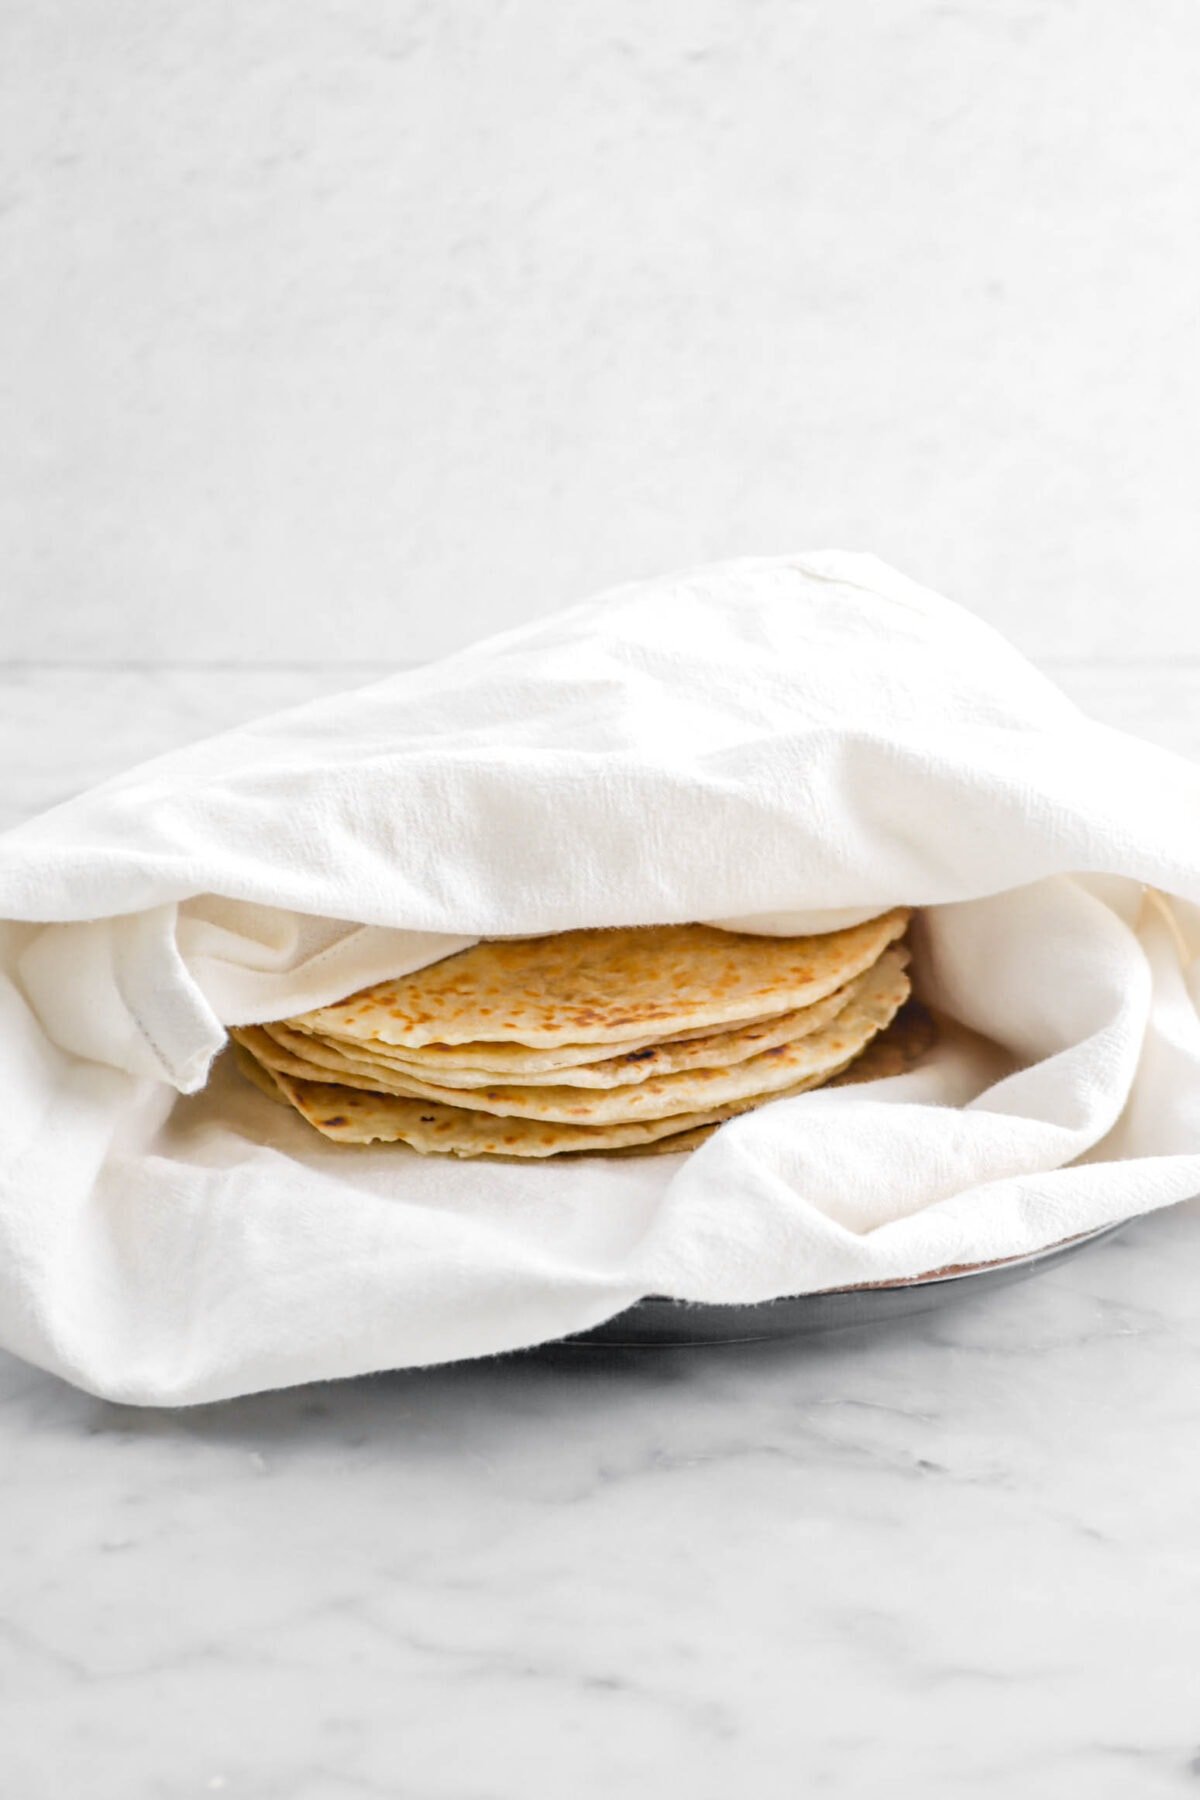 tortillas wrapped in white napkin